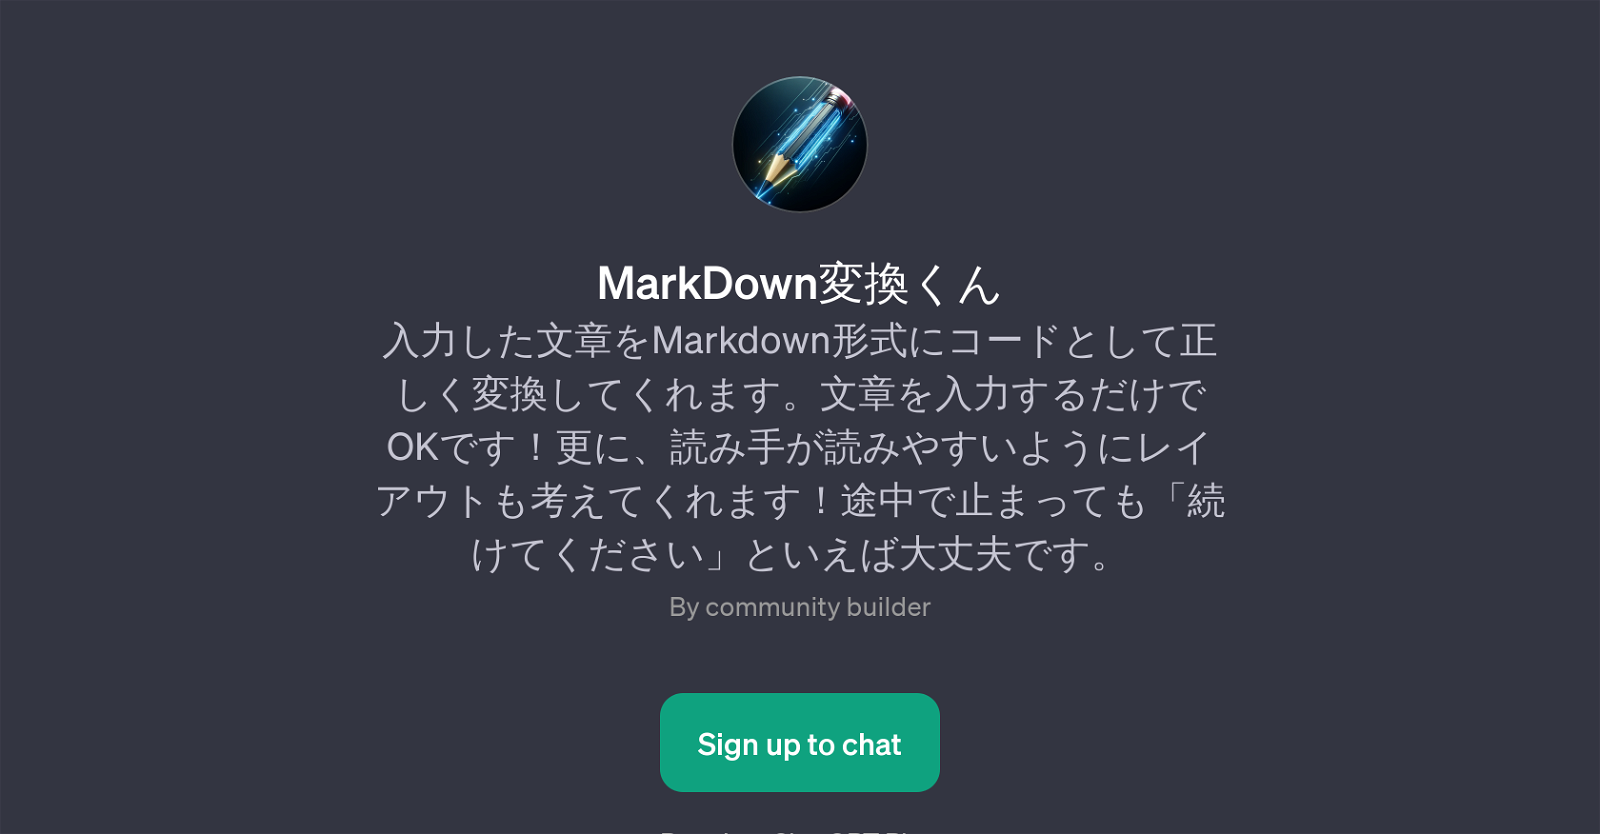 MarkDown website